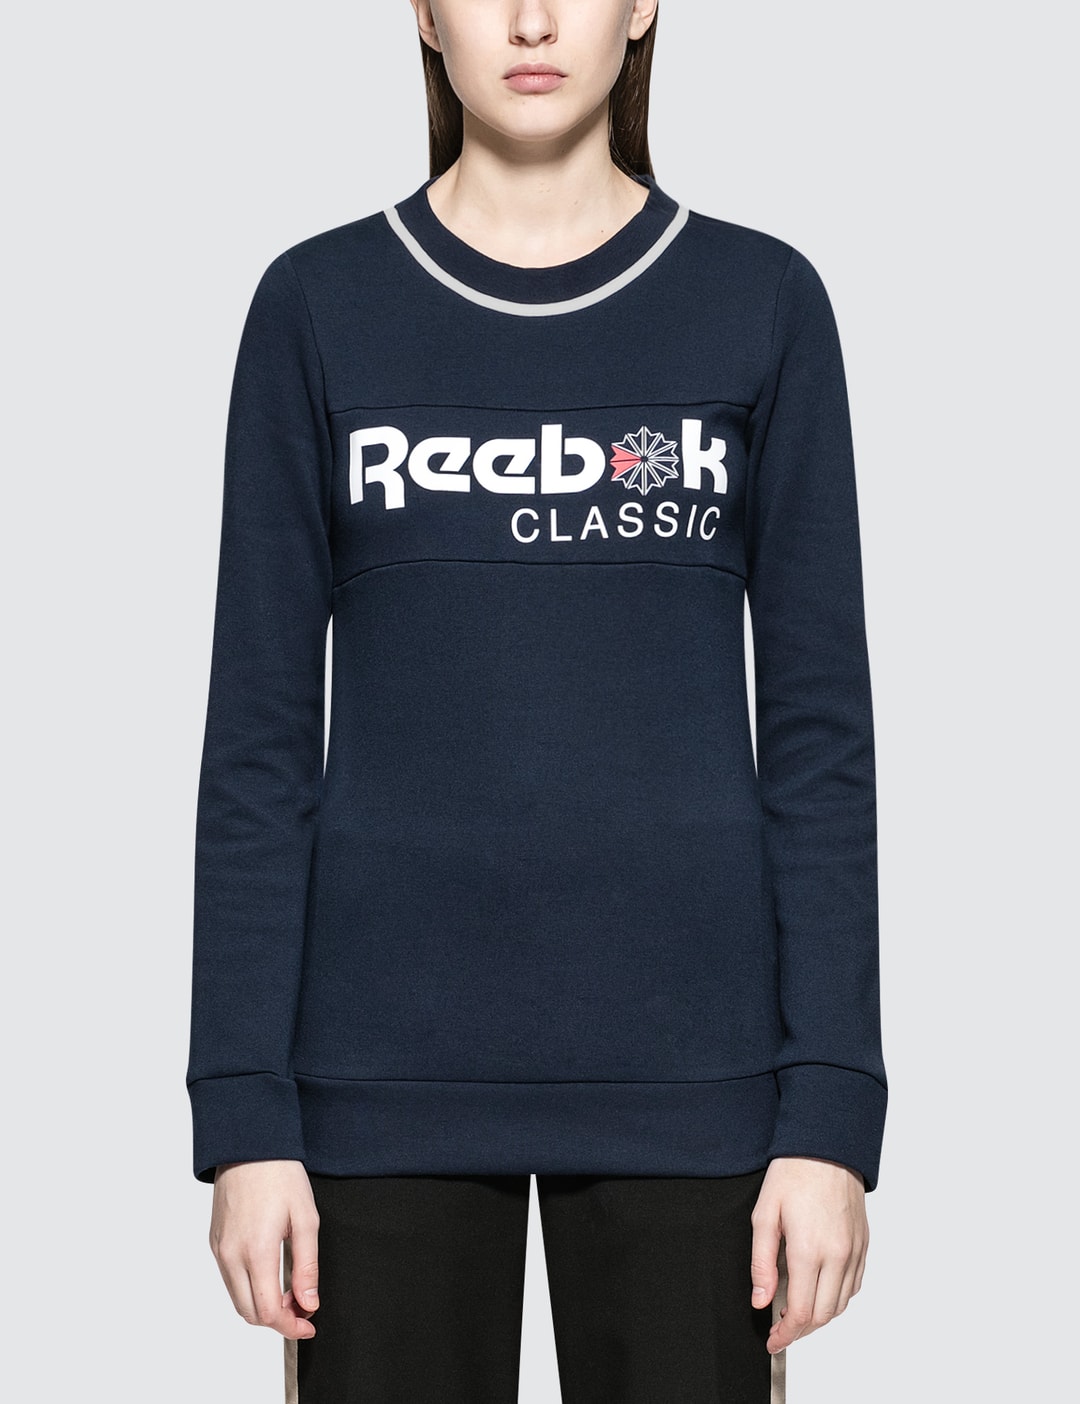 Reebok - Iconic Crew Sweatshirt | HBX - Globally Curated Fashion and ...